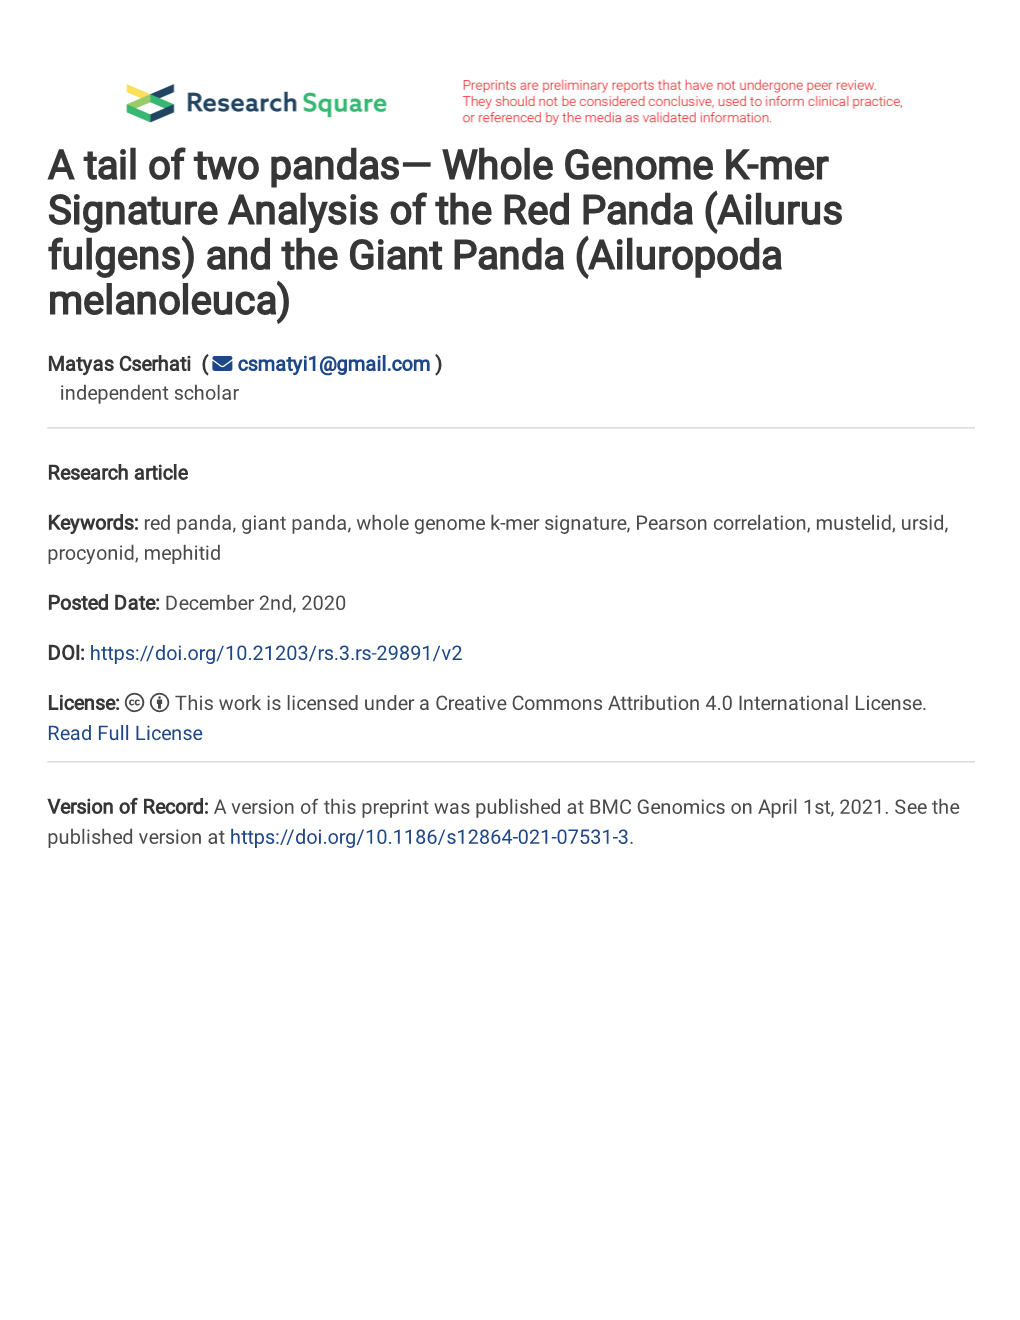 Whole Genome K-Mer Signature Analysis of the Red Panda (Ailurus Fulgens) and the Giant Panda (Ailuropoda Melanoleuca)